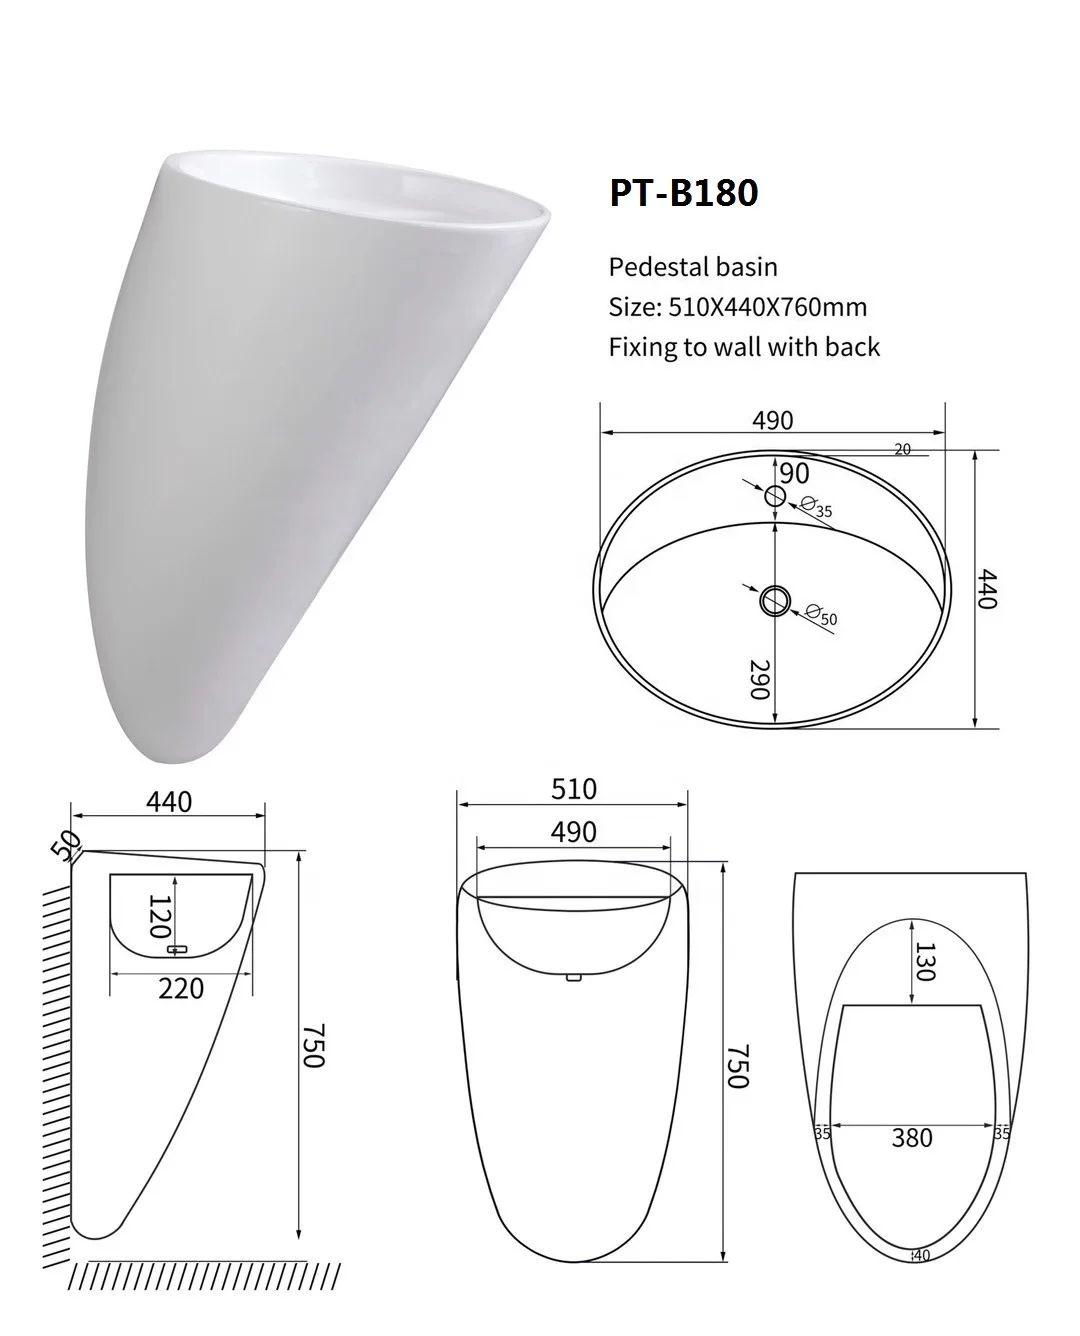 PATE B180 ceramic wall mounted round pedestal basin sanitary ware mini bathroom home washroom sink